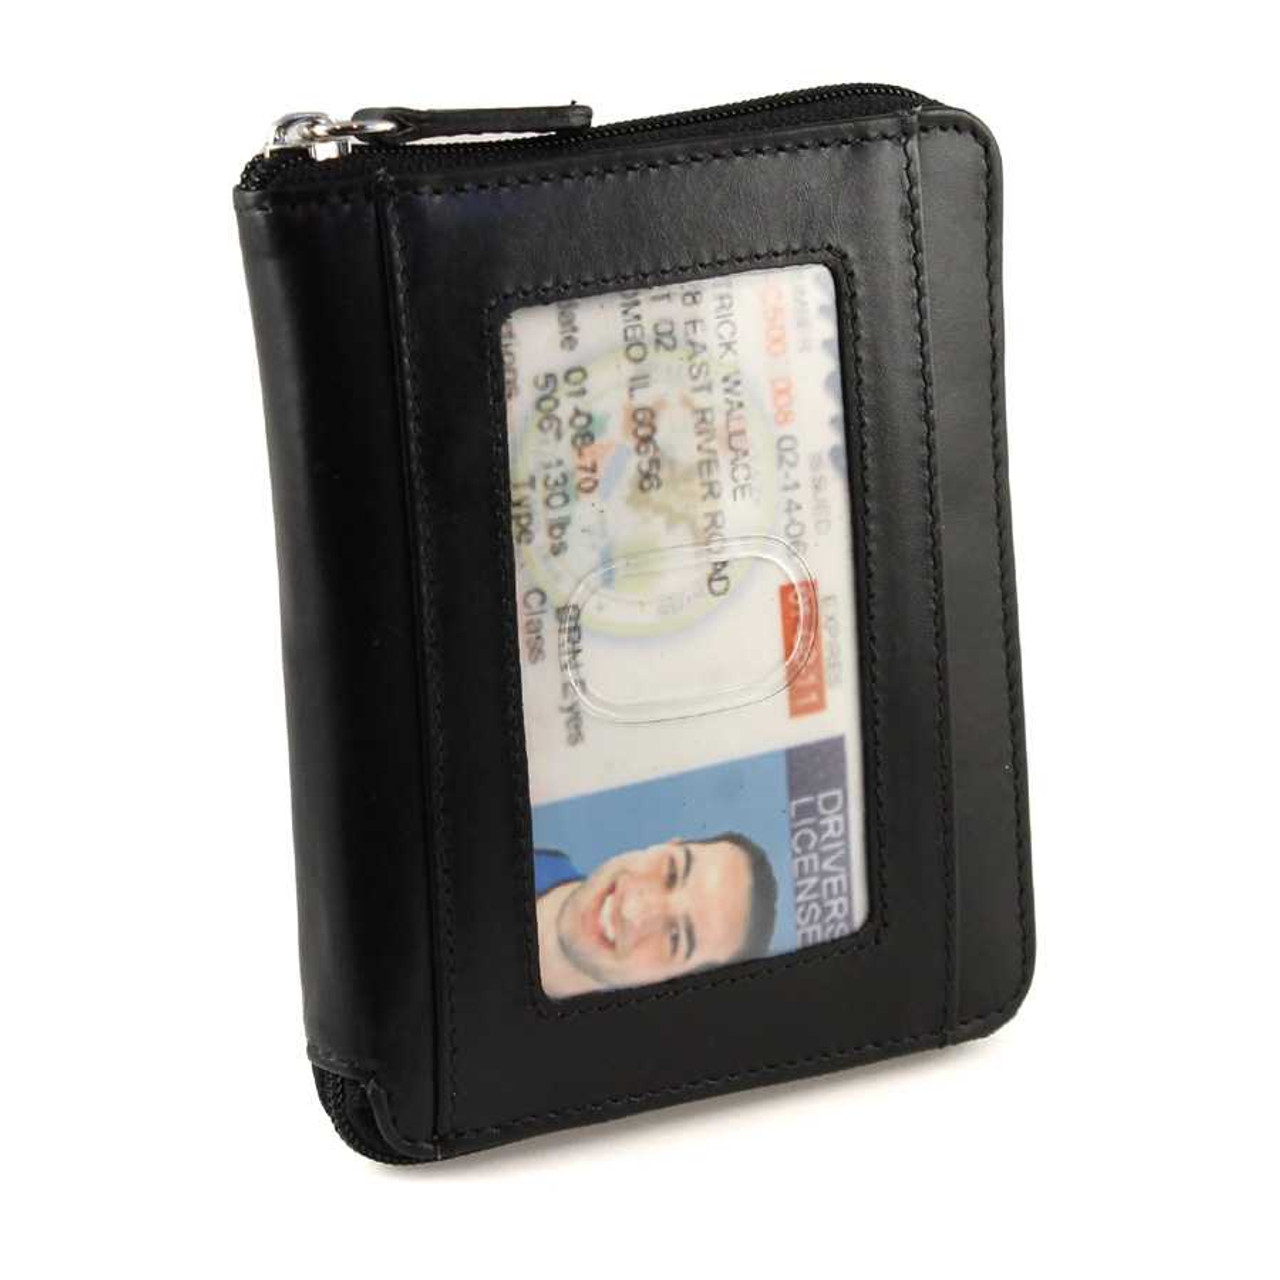 Timberland RFID Leather Crossbody Bag Wallet Purse - Wheat (Chestnut) | eBay